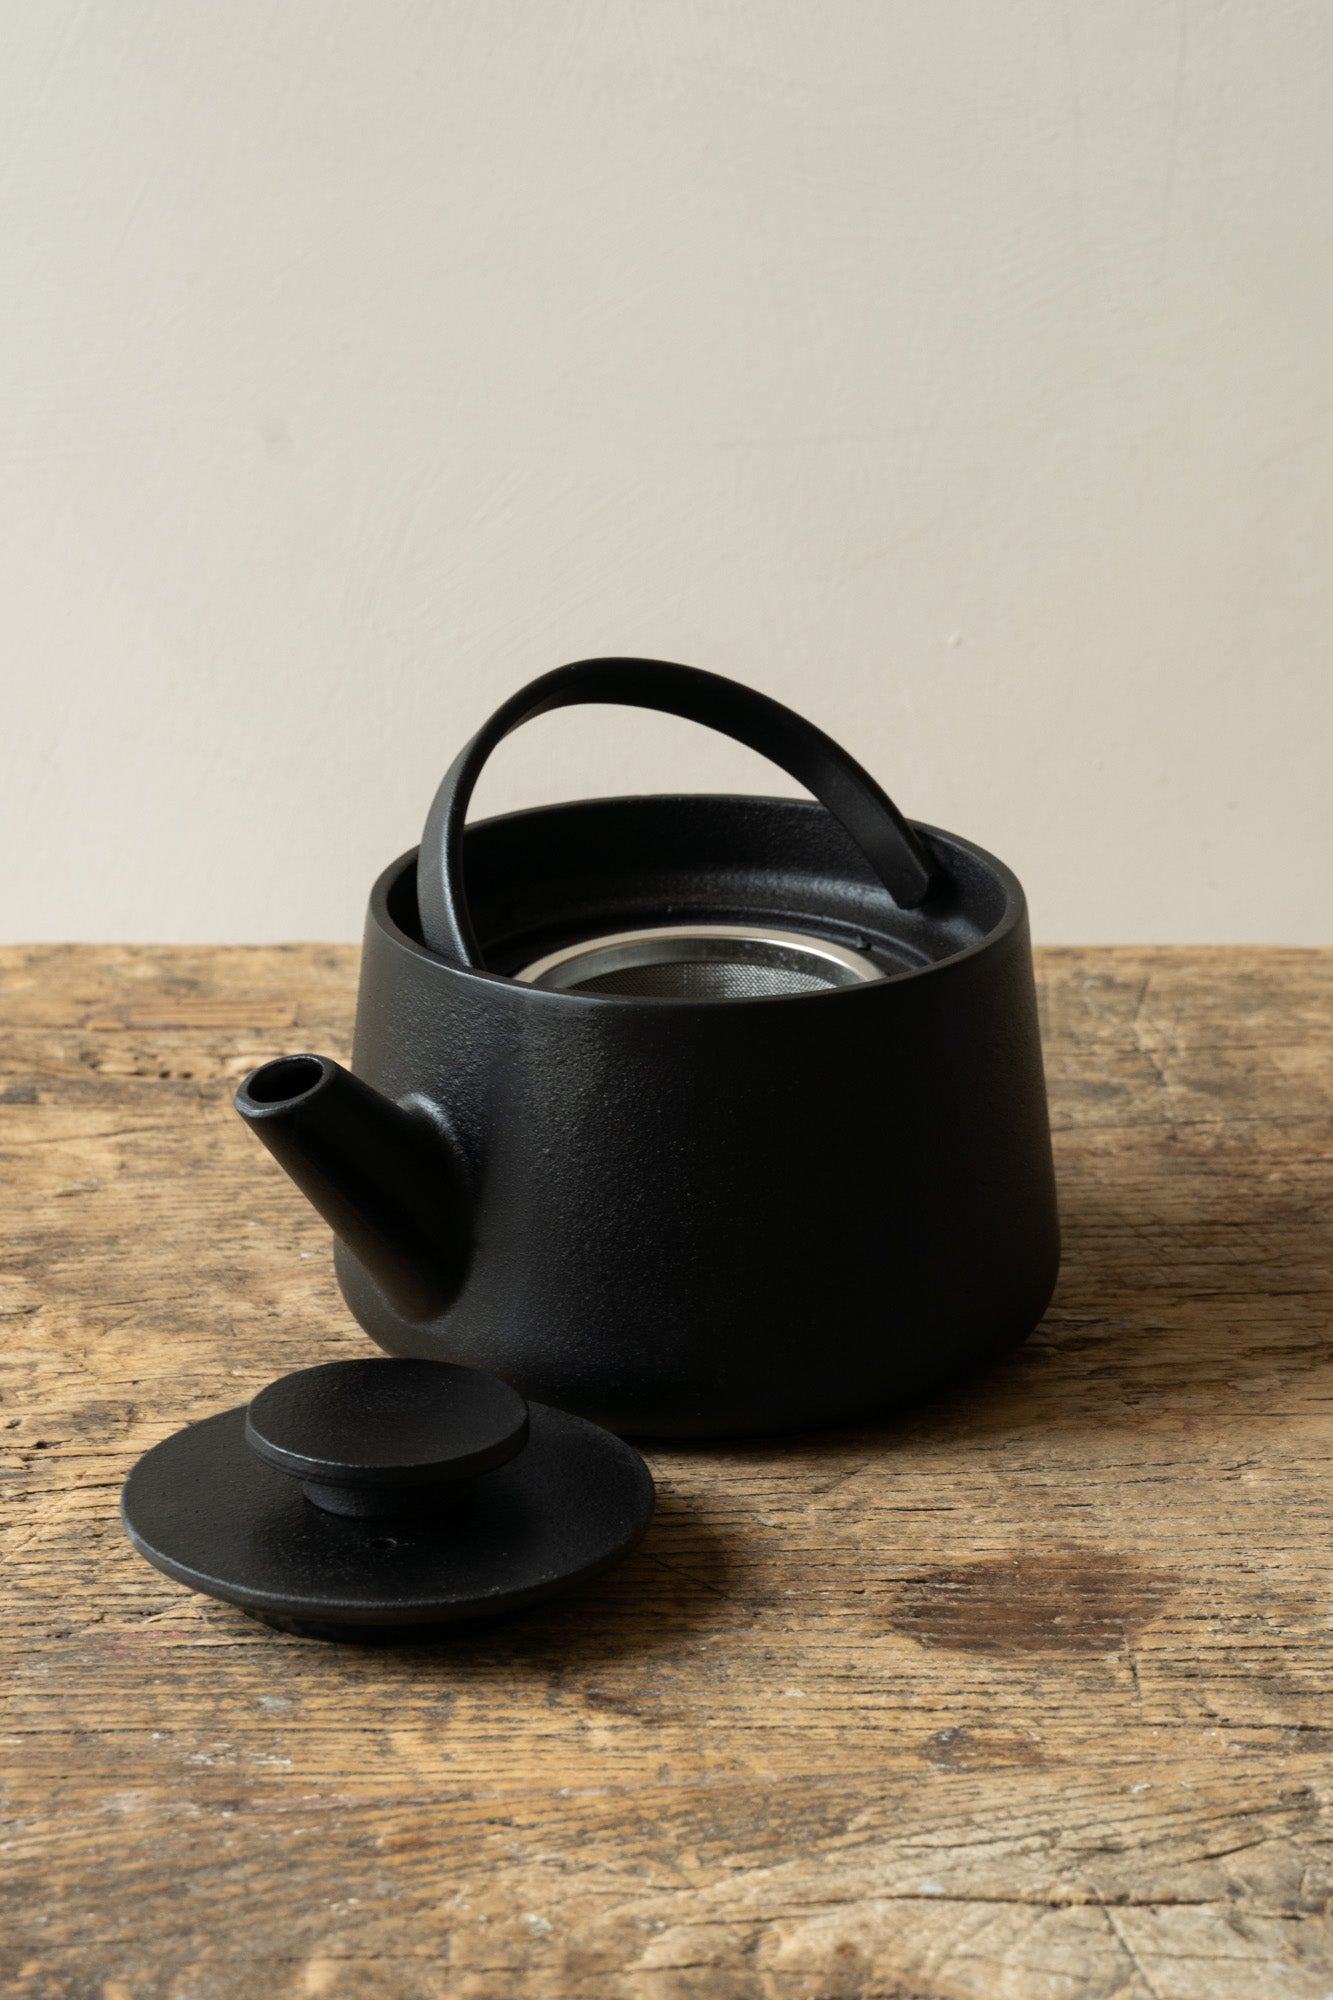 Inku Teapot in Black by Serax.